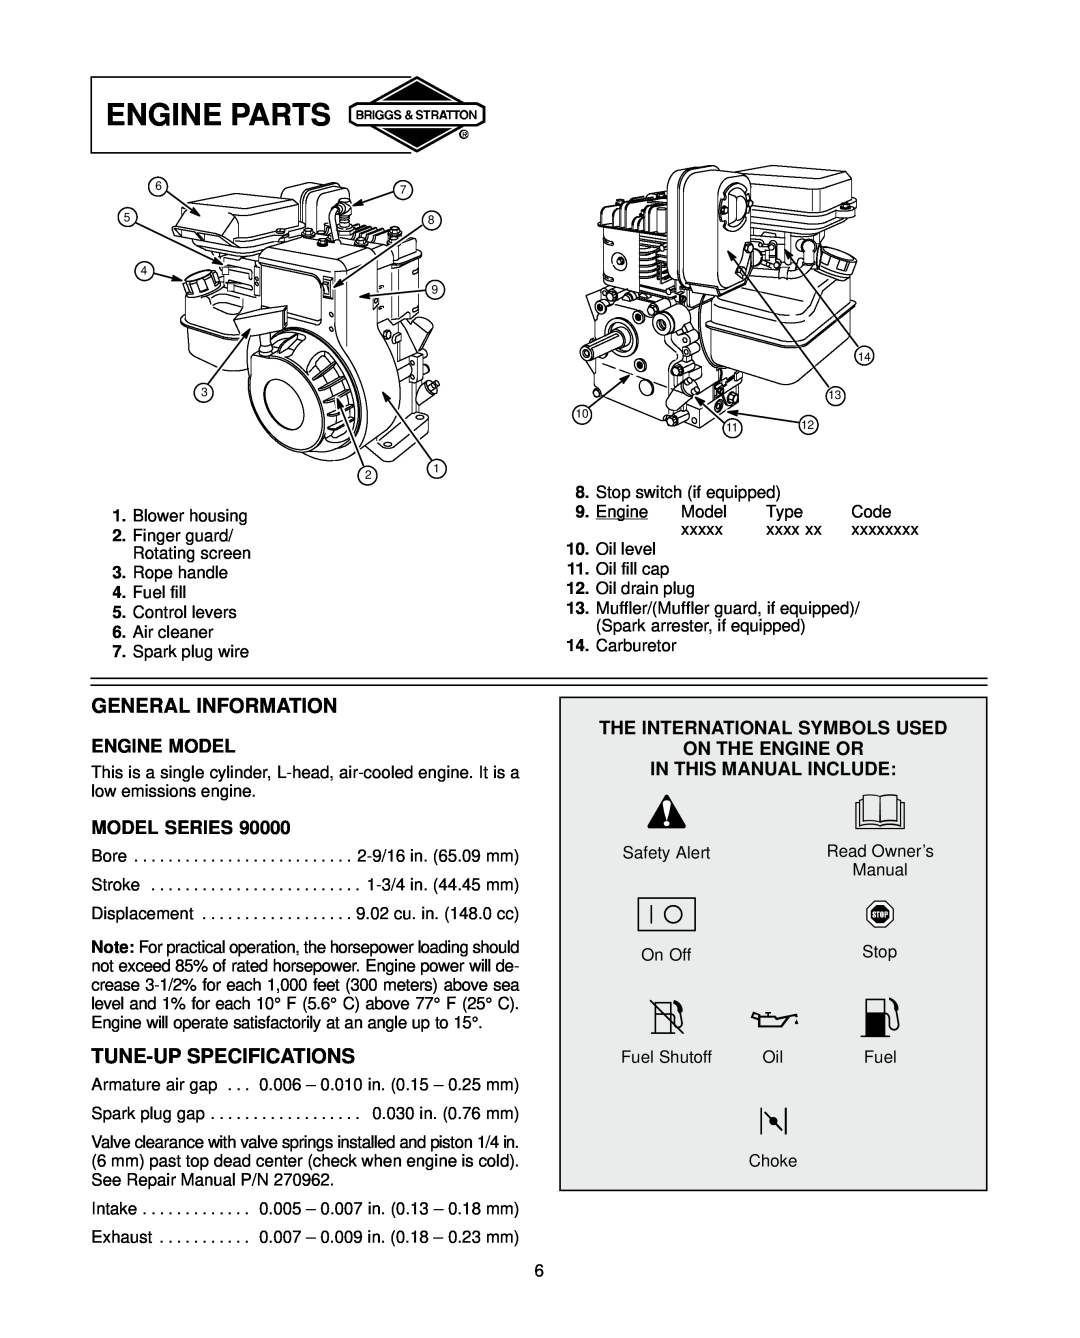 Briggs & Stratton 91200, 92200, 94200 warranty Engine Parts, General Information, Tune-Up Specifications, Engine Model 